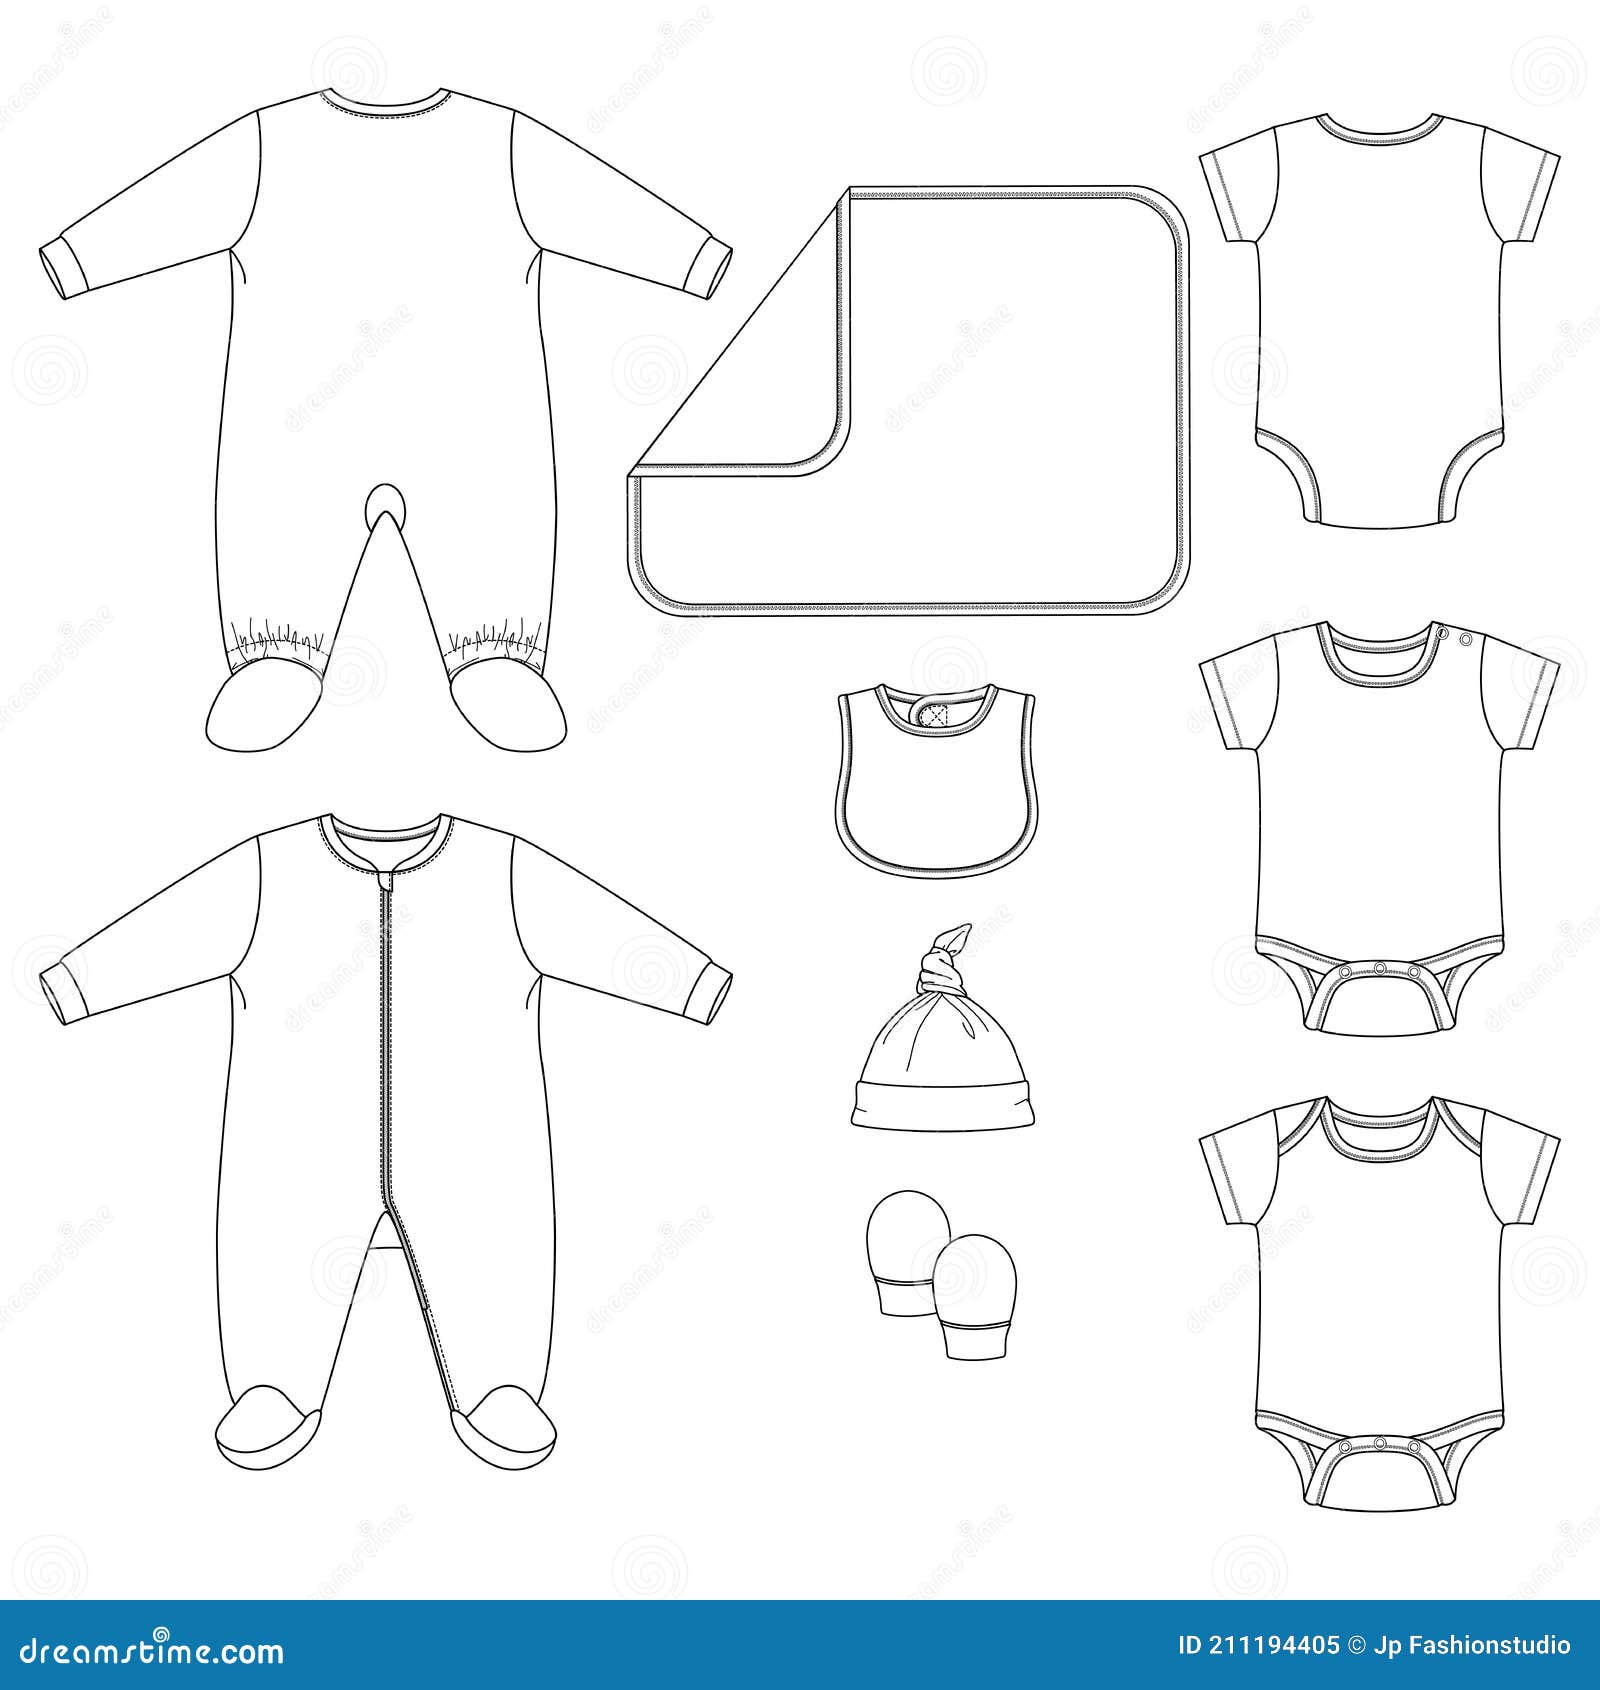 Top 101+ imagen como dibujar ropa de bebe